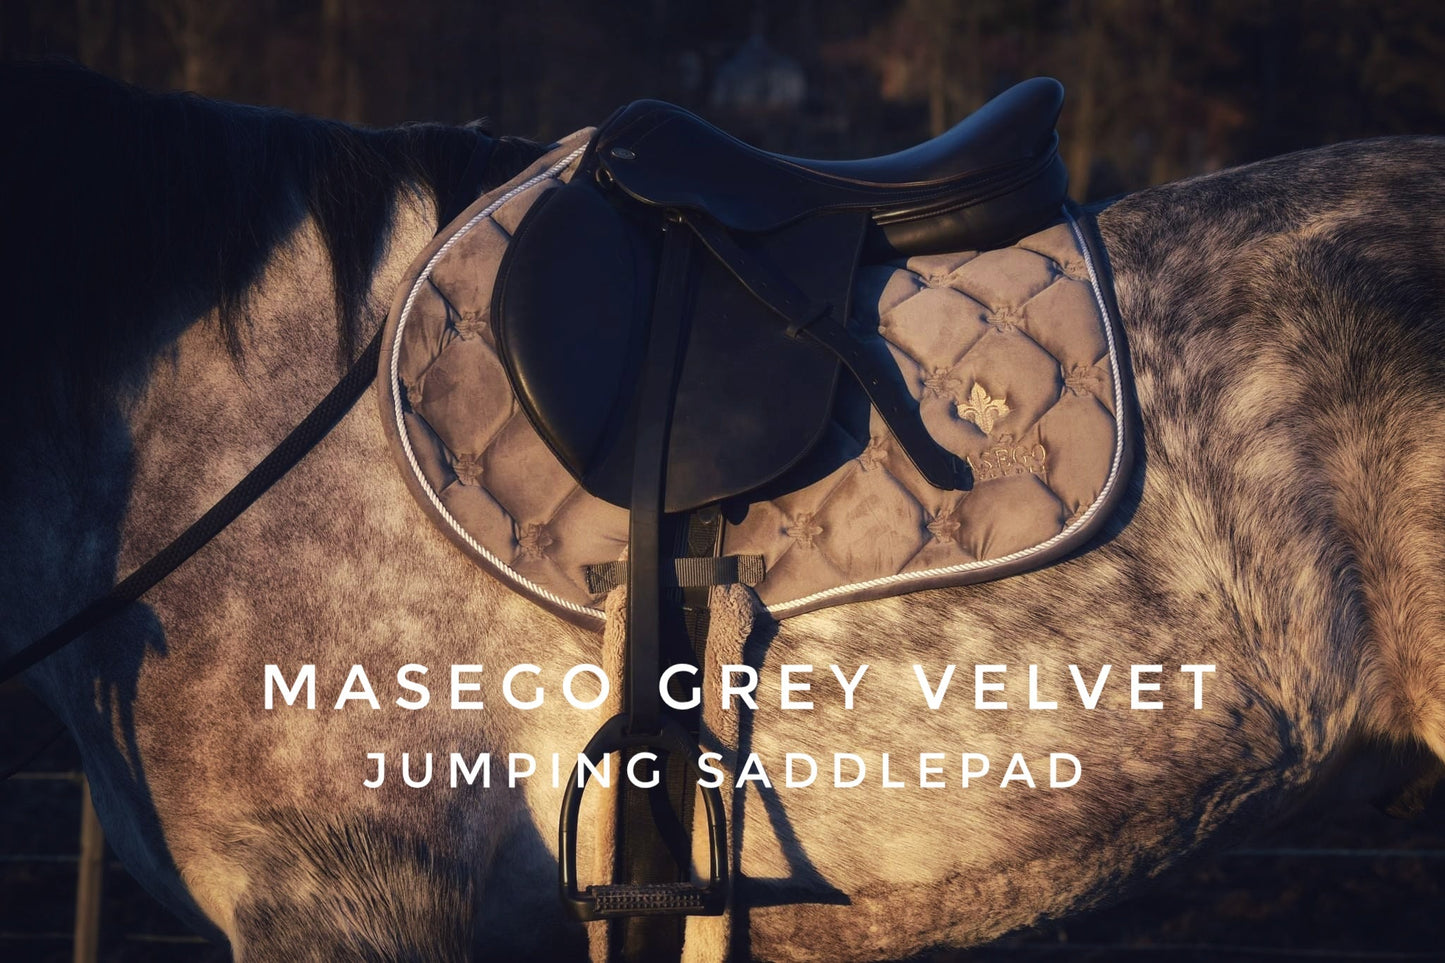 Grey velvet jumping saddle pad